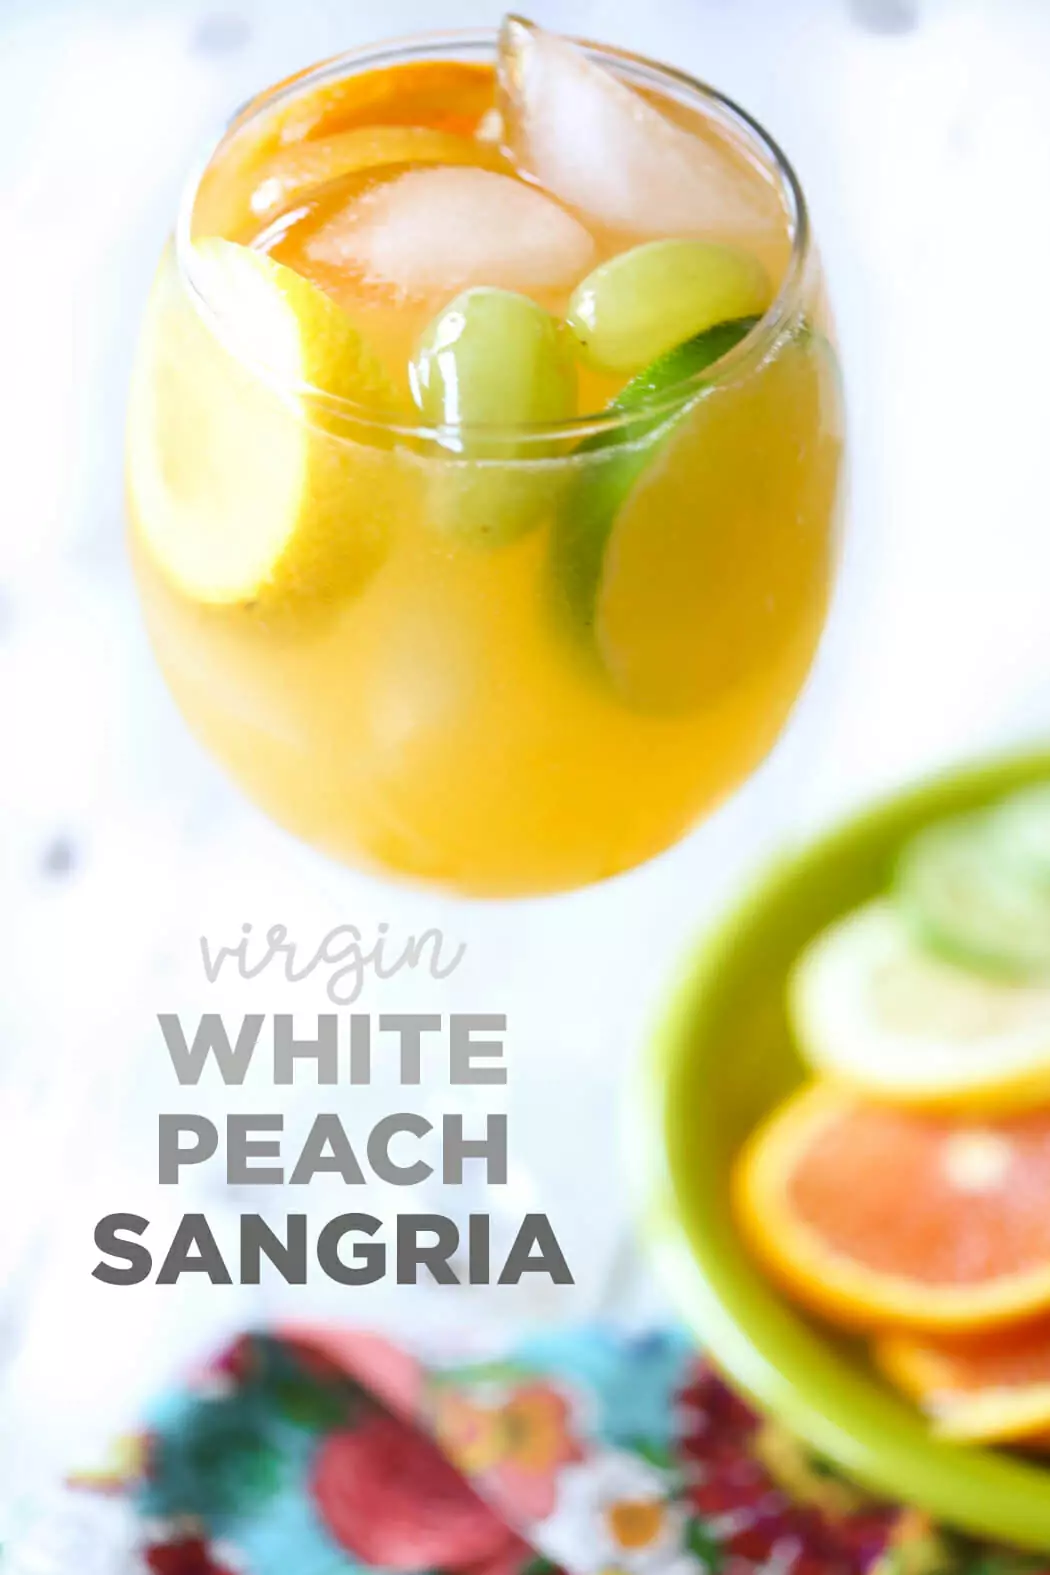 Virgin White Peach Sangria Our Best Bites,Chicken Drumstick Recipes